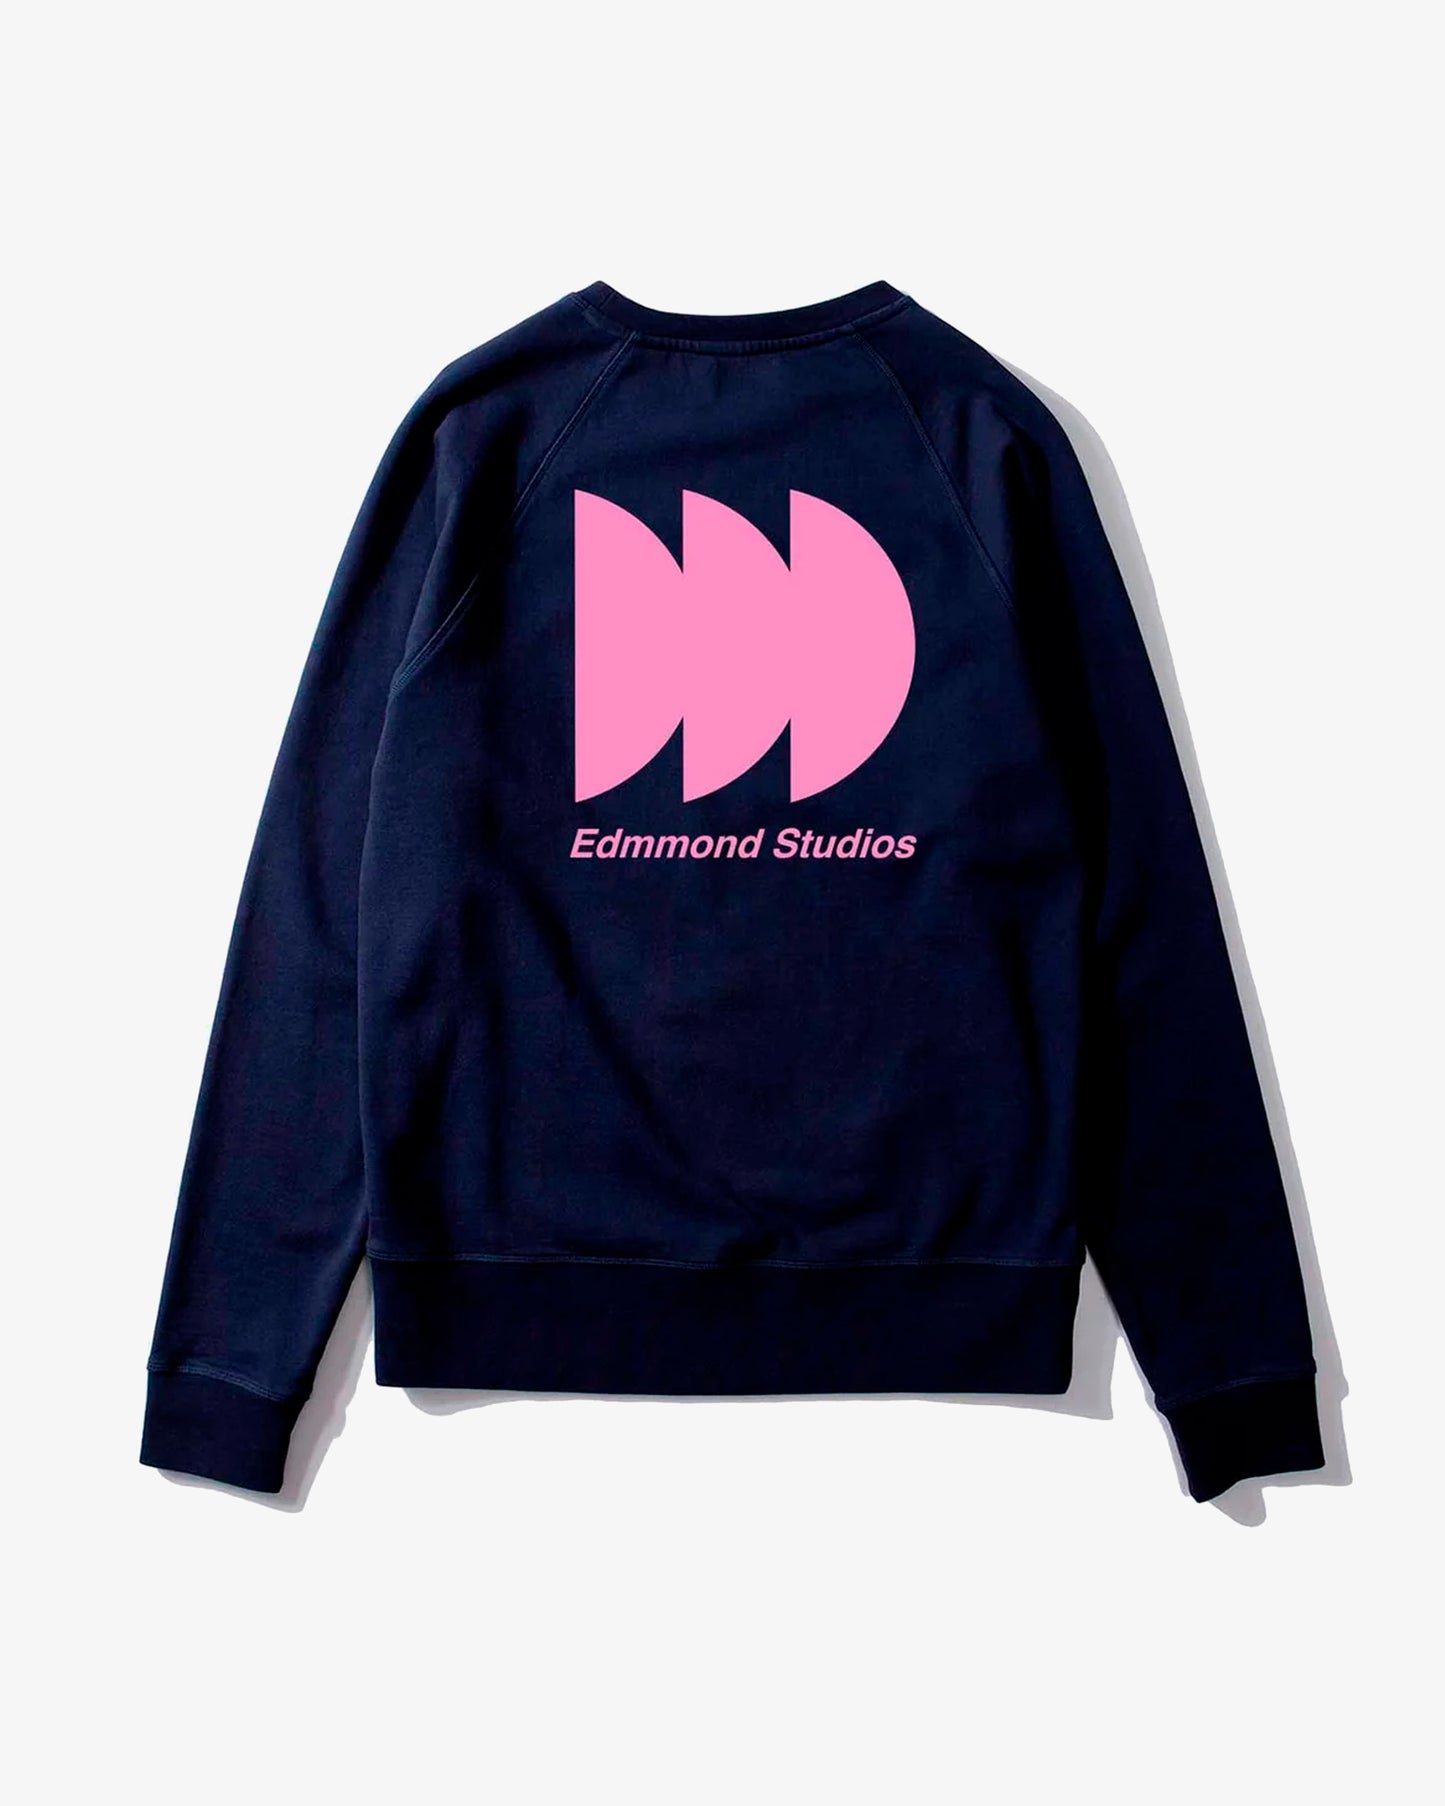 Edmmond Studios Radio Club Sweatshirts